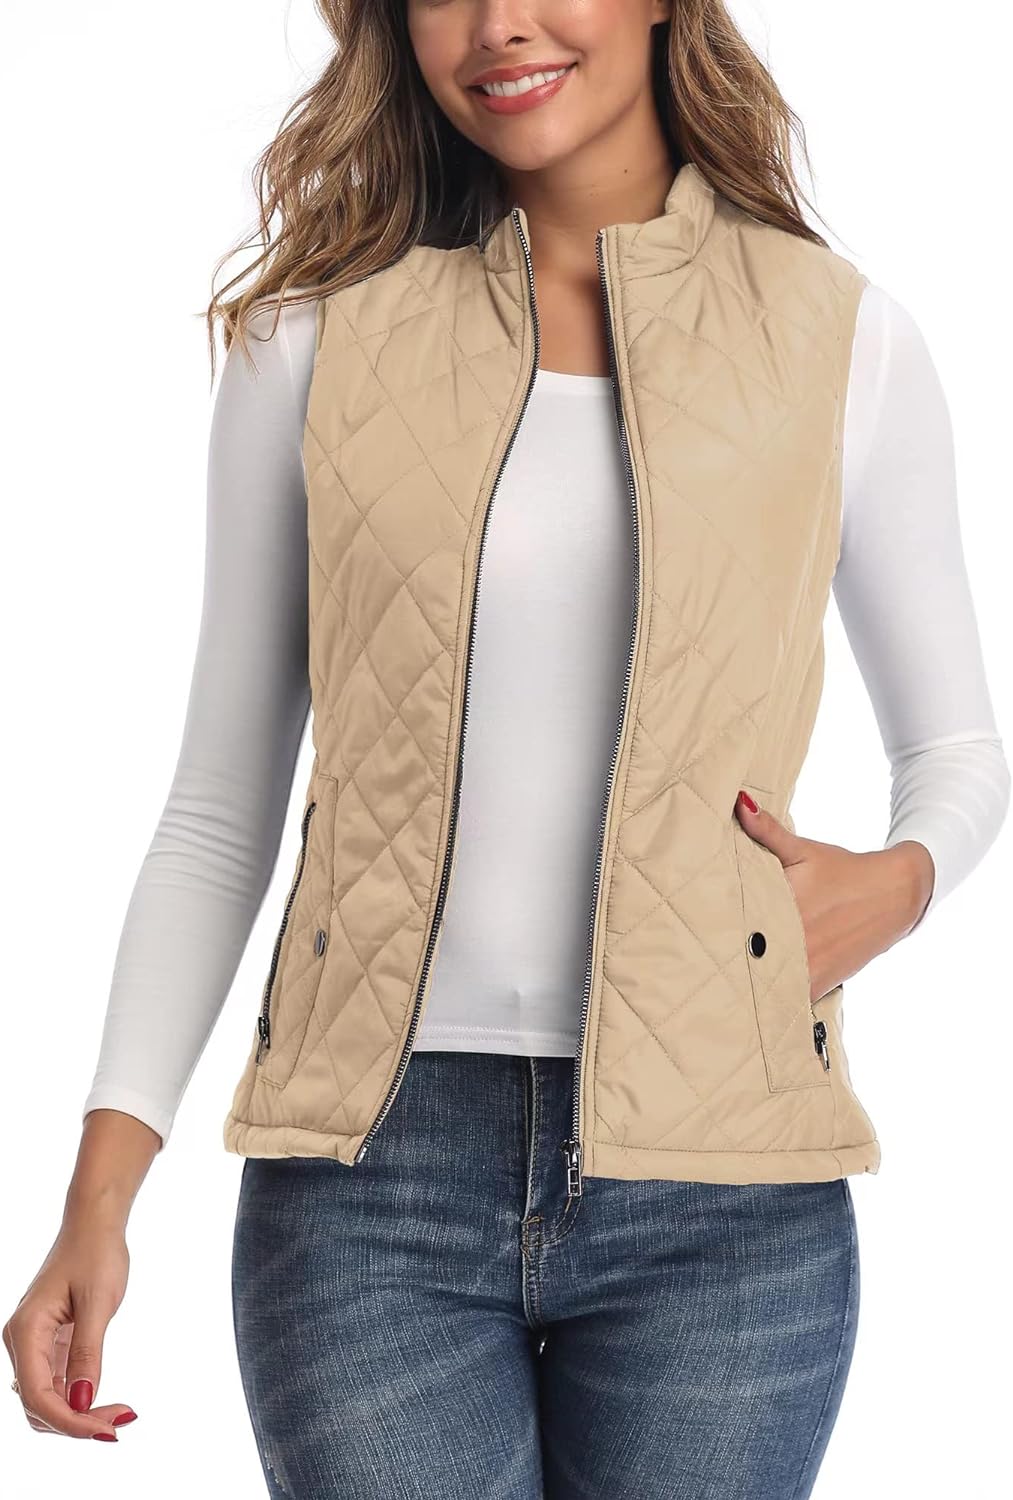 Xeoxarel Women's Quilted Vest, Puffer Sleeveless Jacket (XS-XXL) | eBay